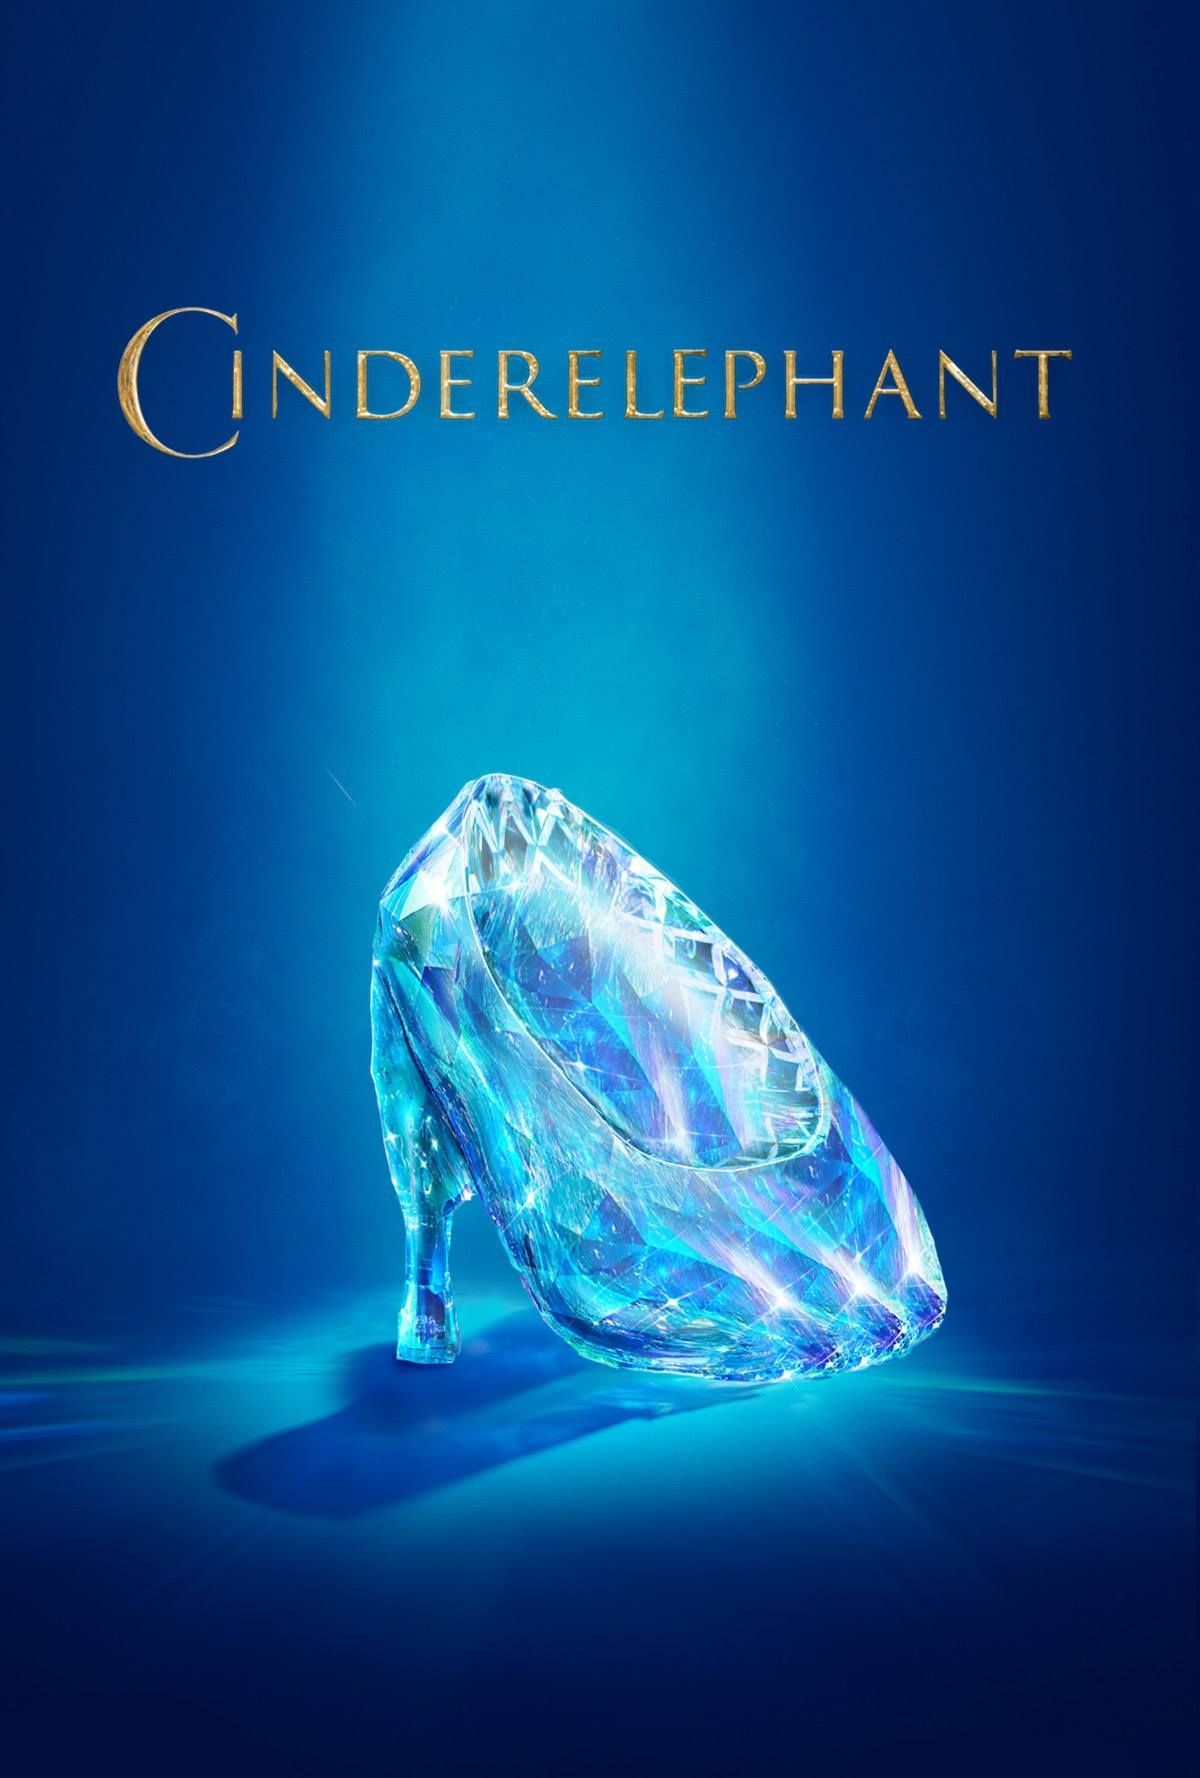 Zootopia - Cinderella Poster